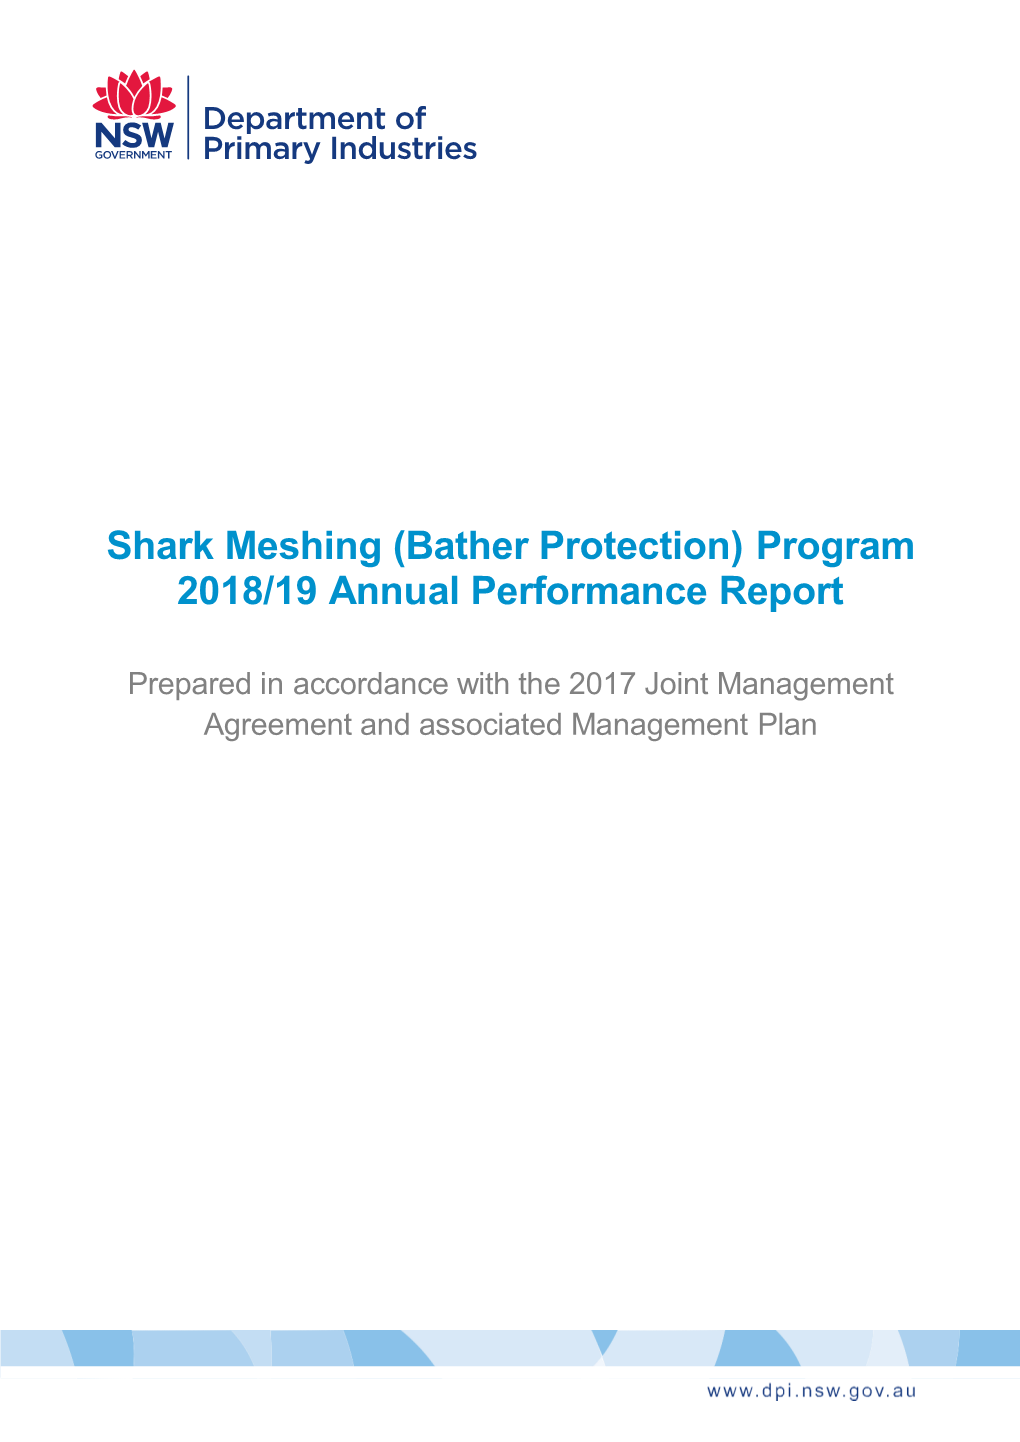 Shark Meshing (Bather Protection) Program 2018/19 Annual Performance Report